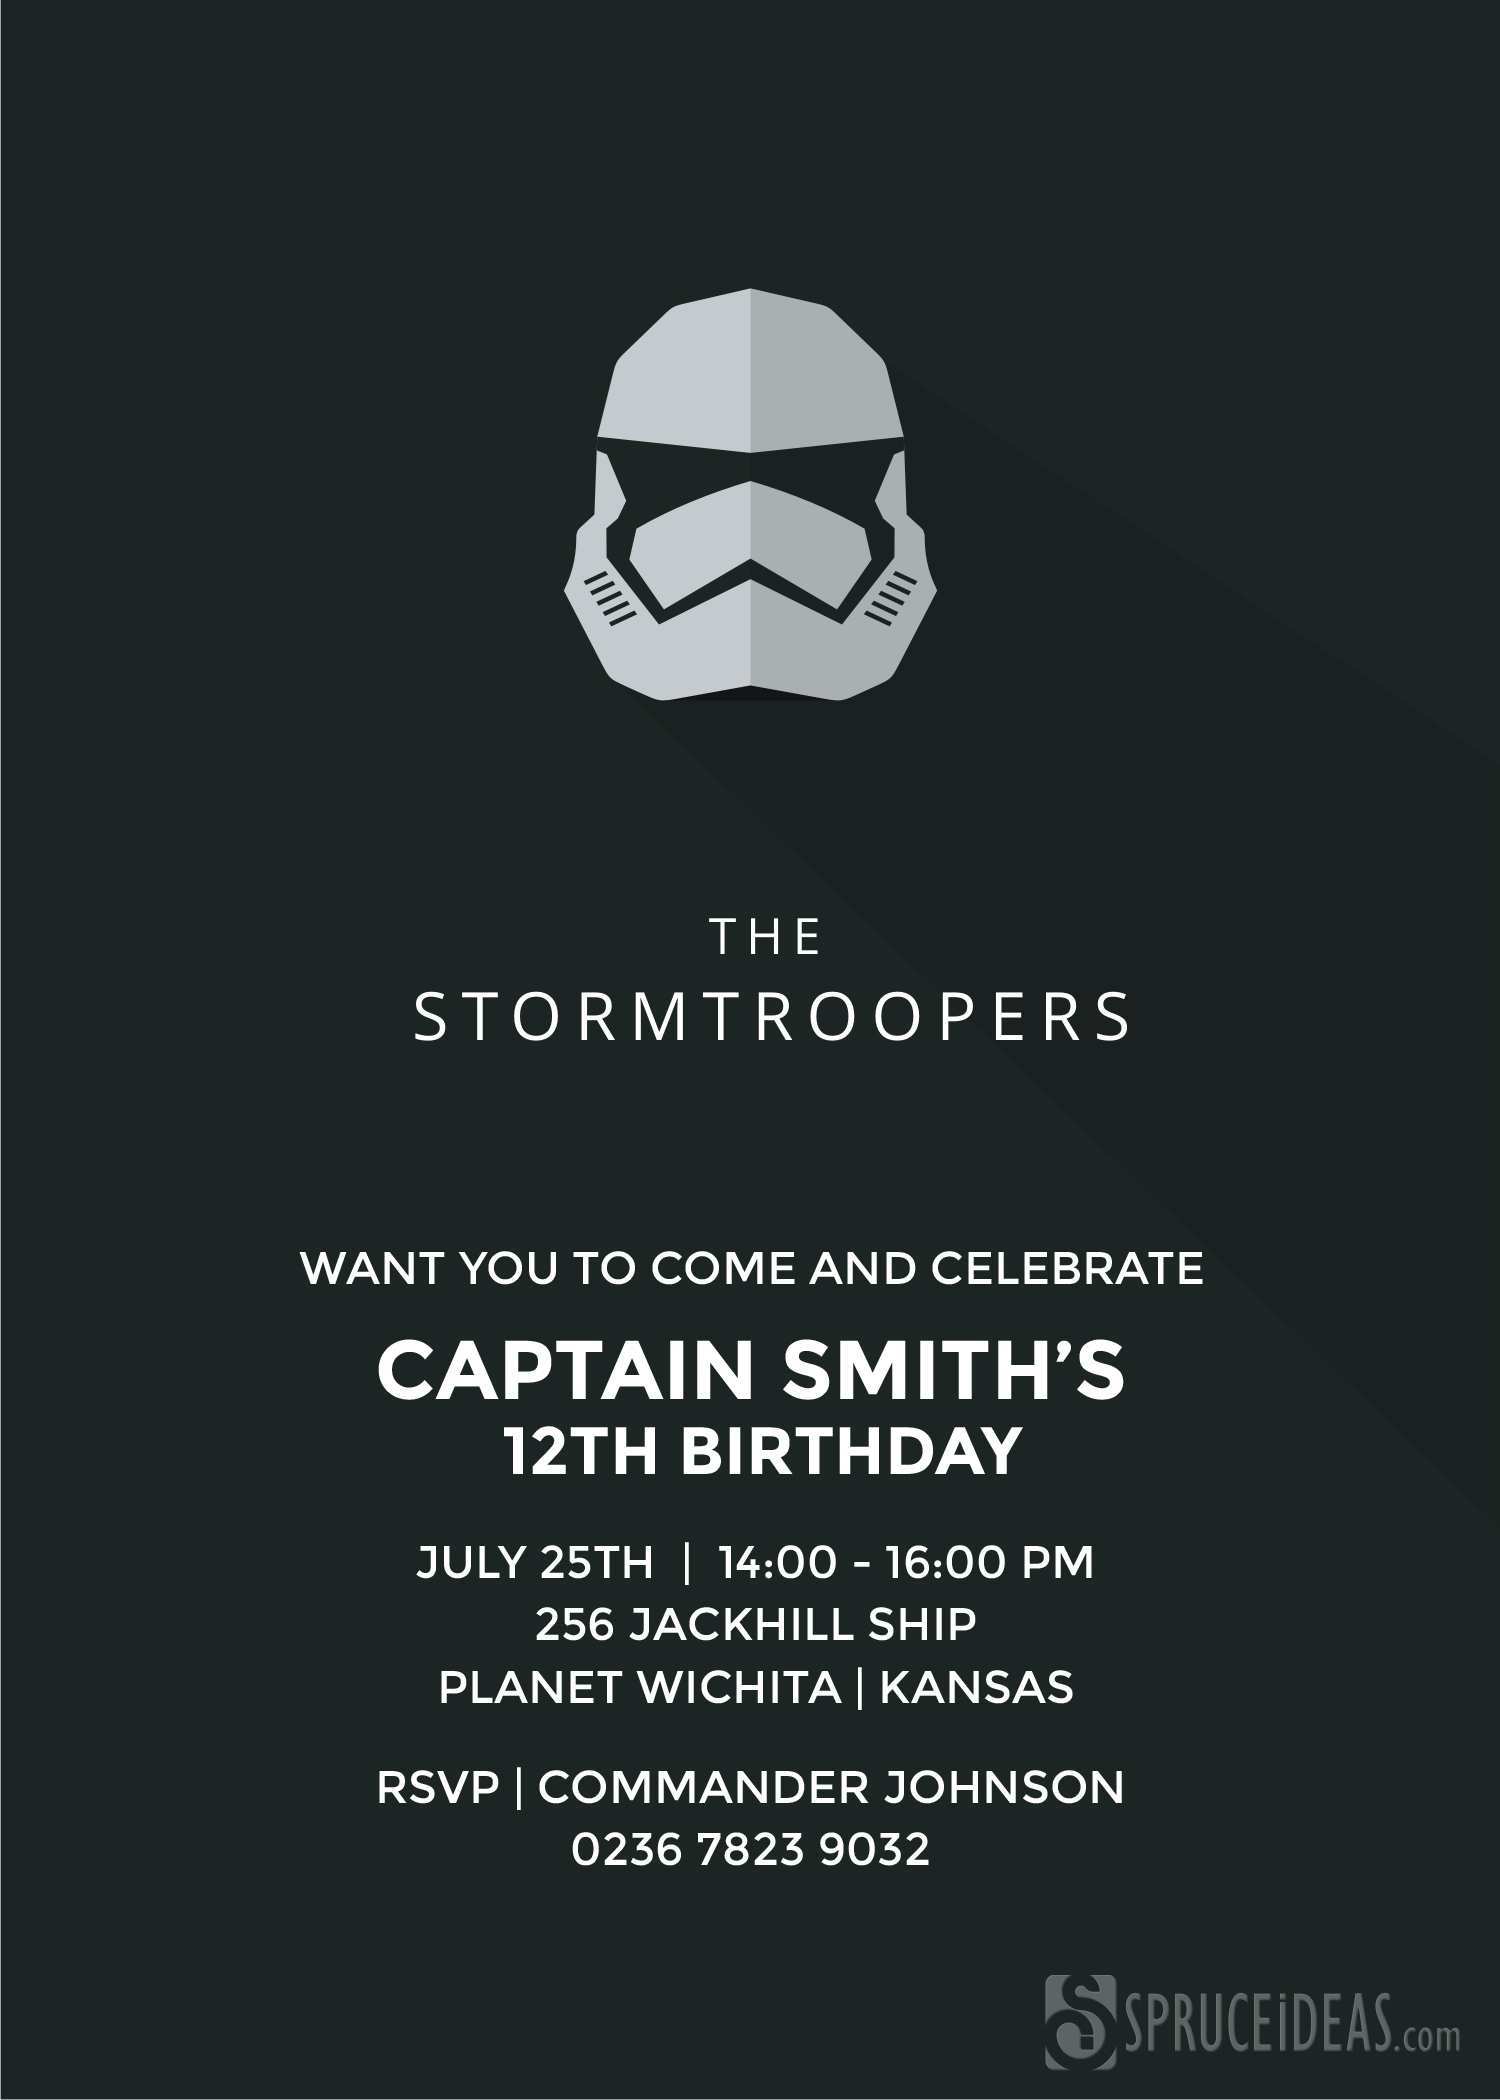 star wars invitation card